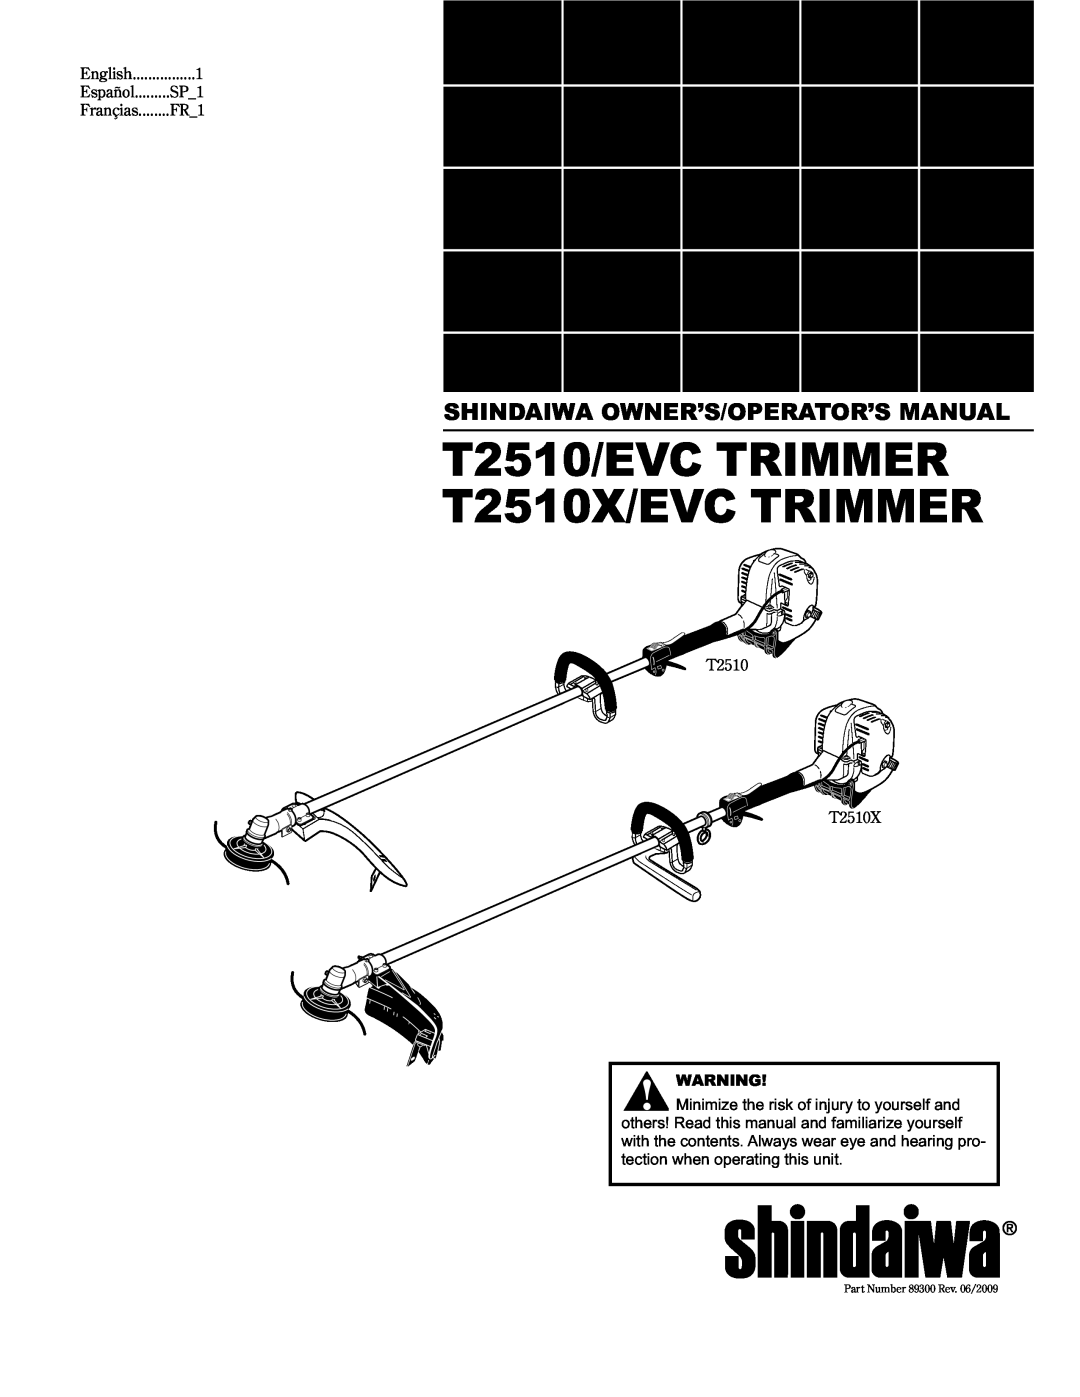 Shindaiwa 89300 manual Shindaiwa Owner’S/Operator’S Manual, T2510/EVC TRIMMER T2510X/EVC TRIMMER, English 